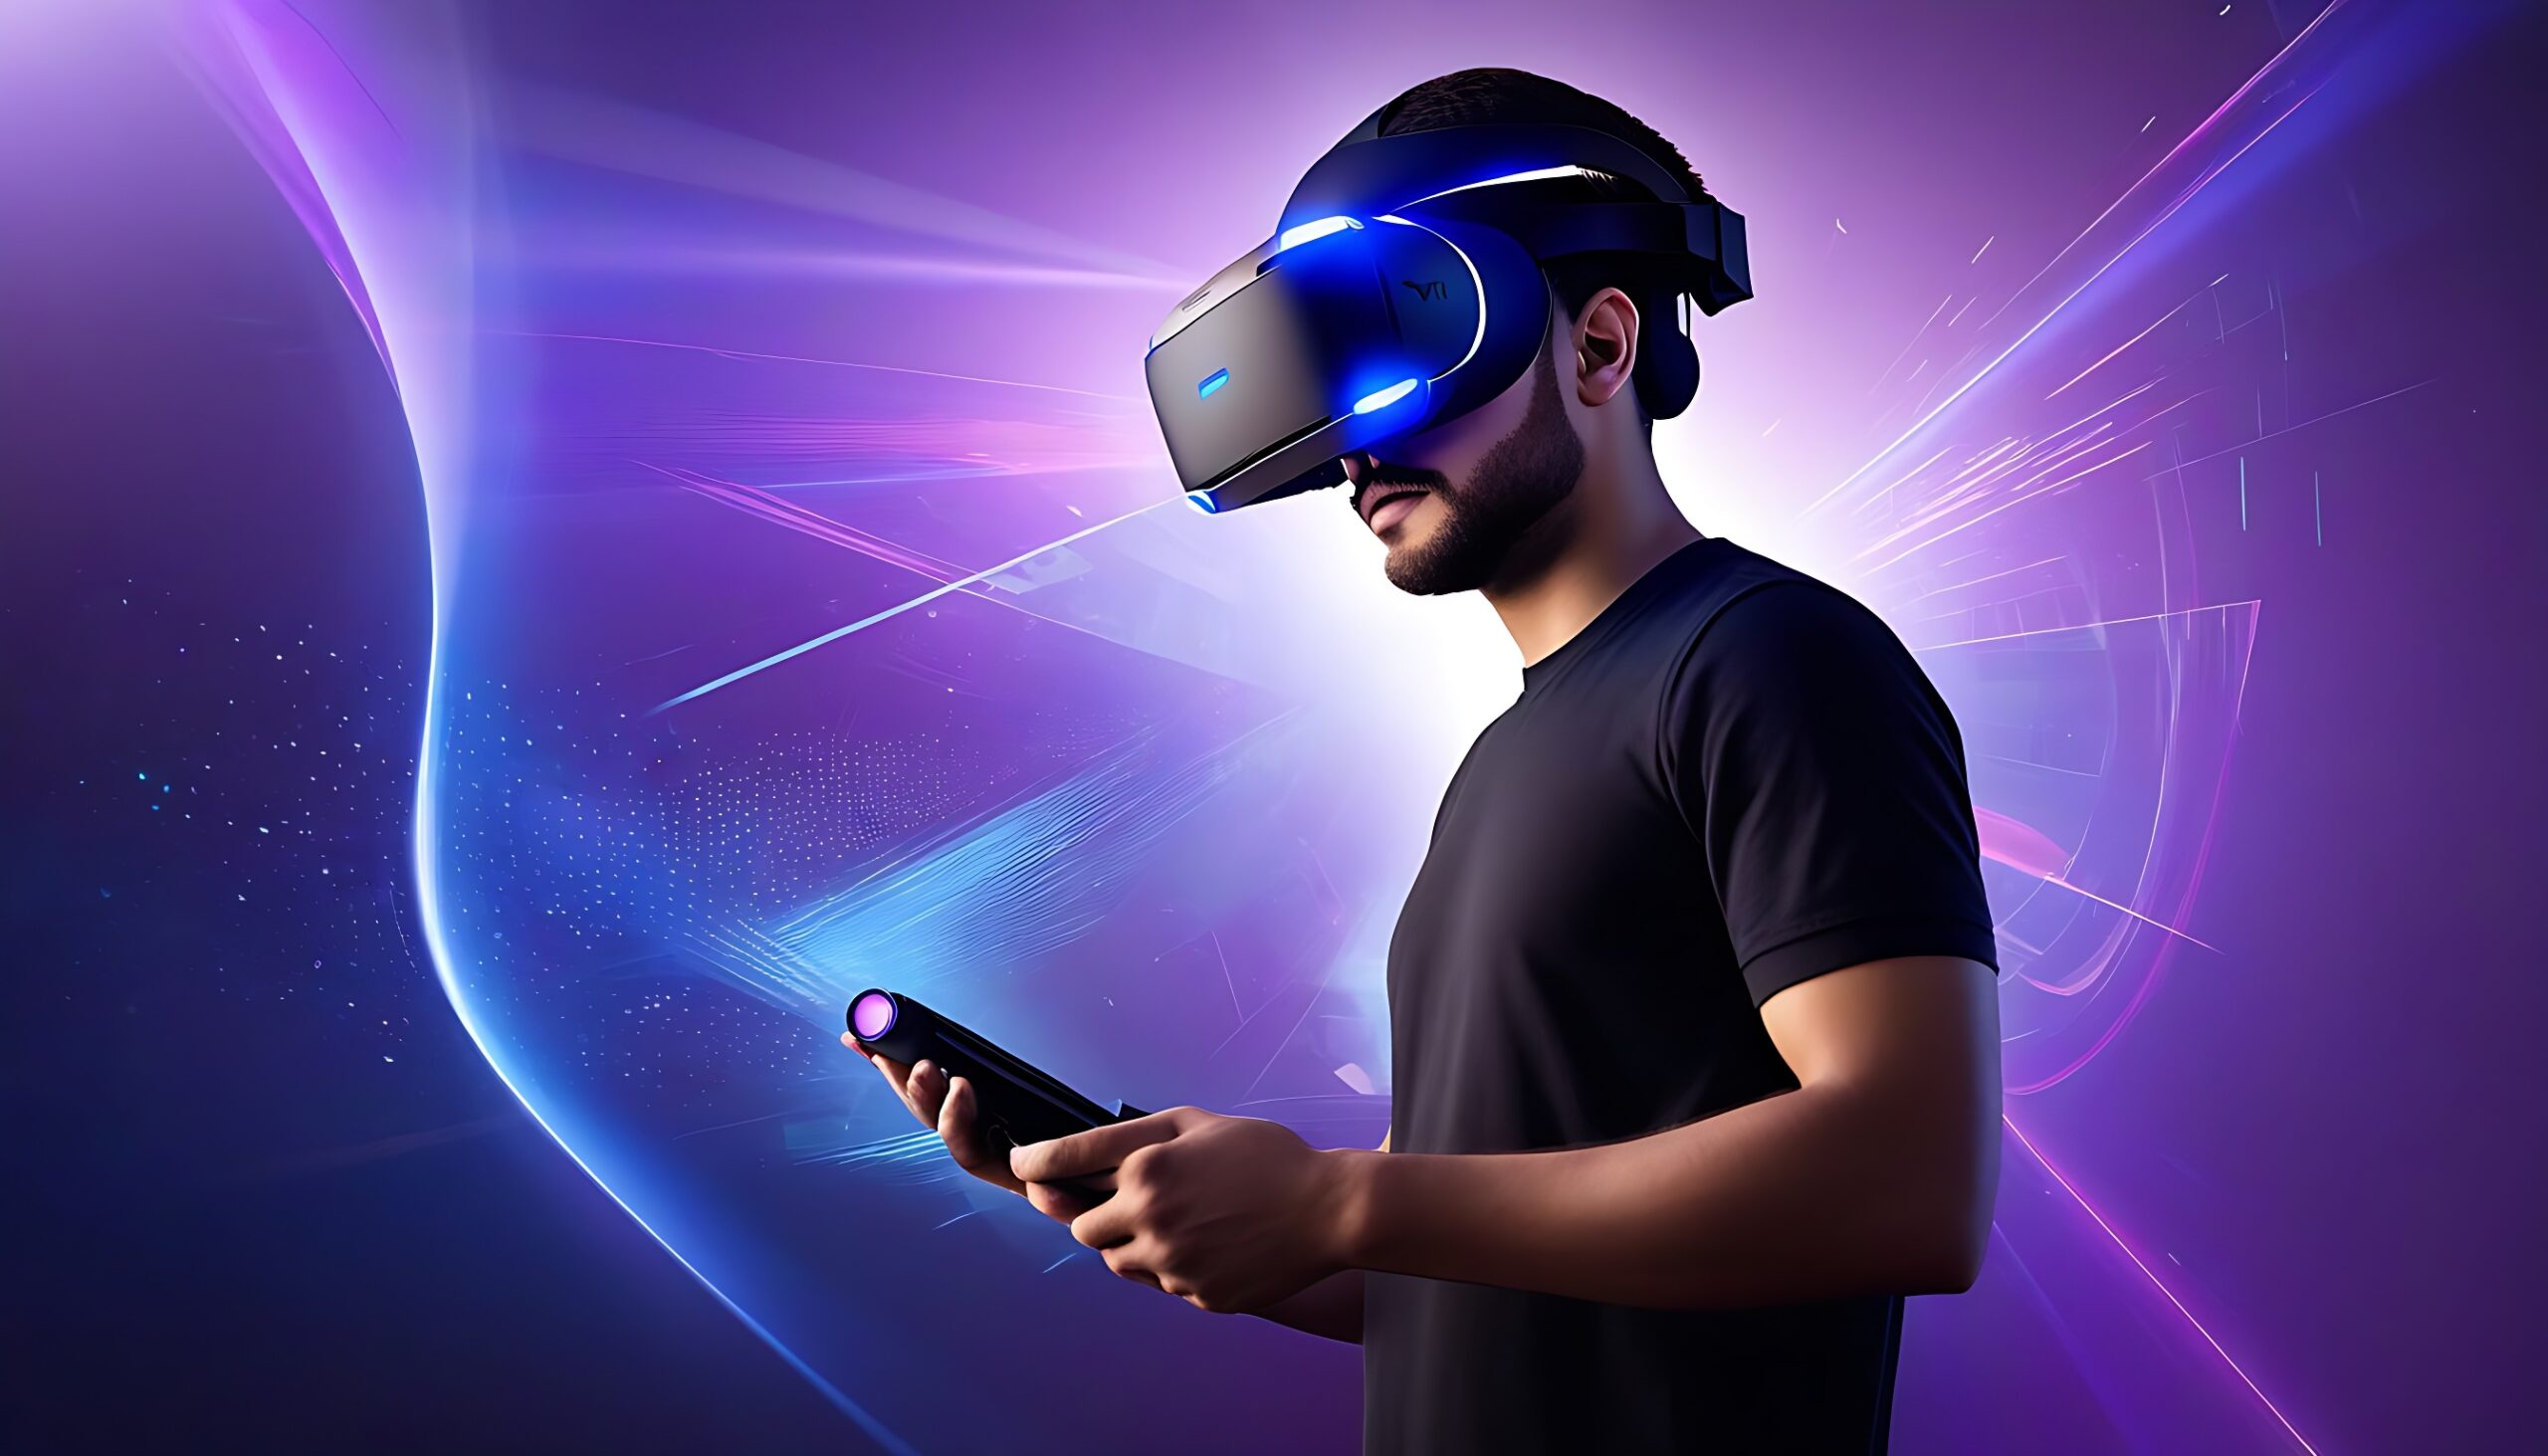 psvr game development services scaled - PlayStation VR 2 Development – Opportunity Unleashed!